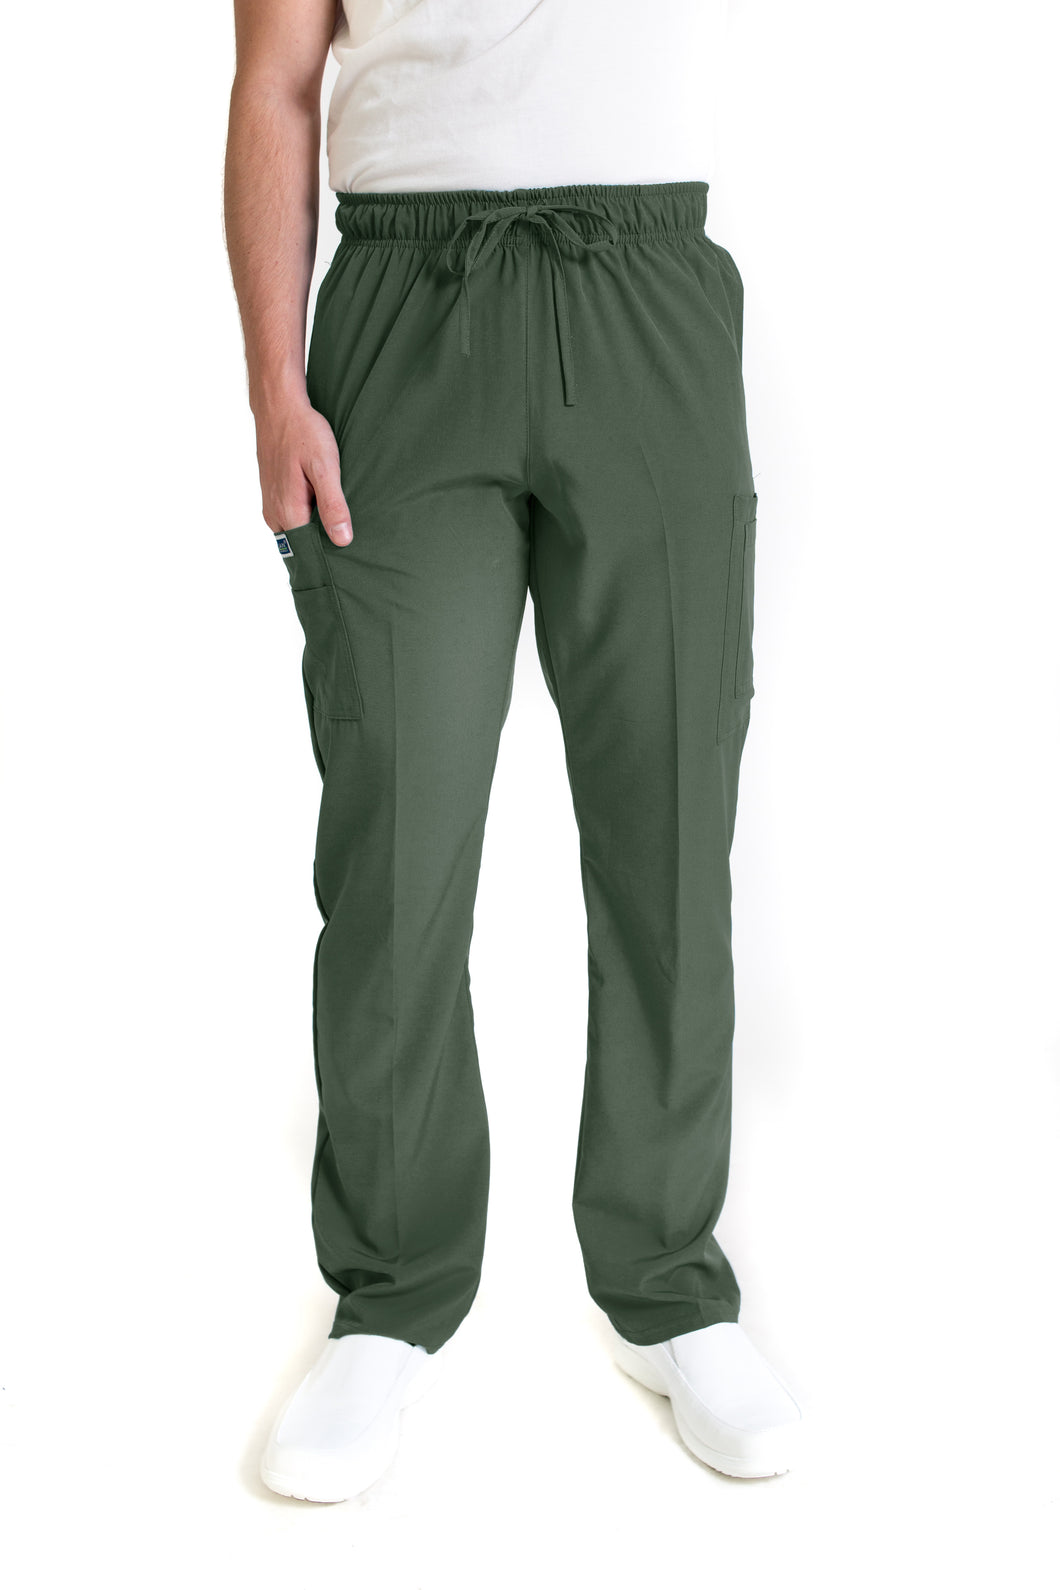 Pantalón Pant EA-02P REPELENTE A FLUIDOS-Color OLIVO HOMBRE-HASSAN Uniformes